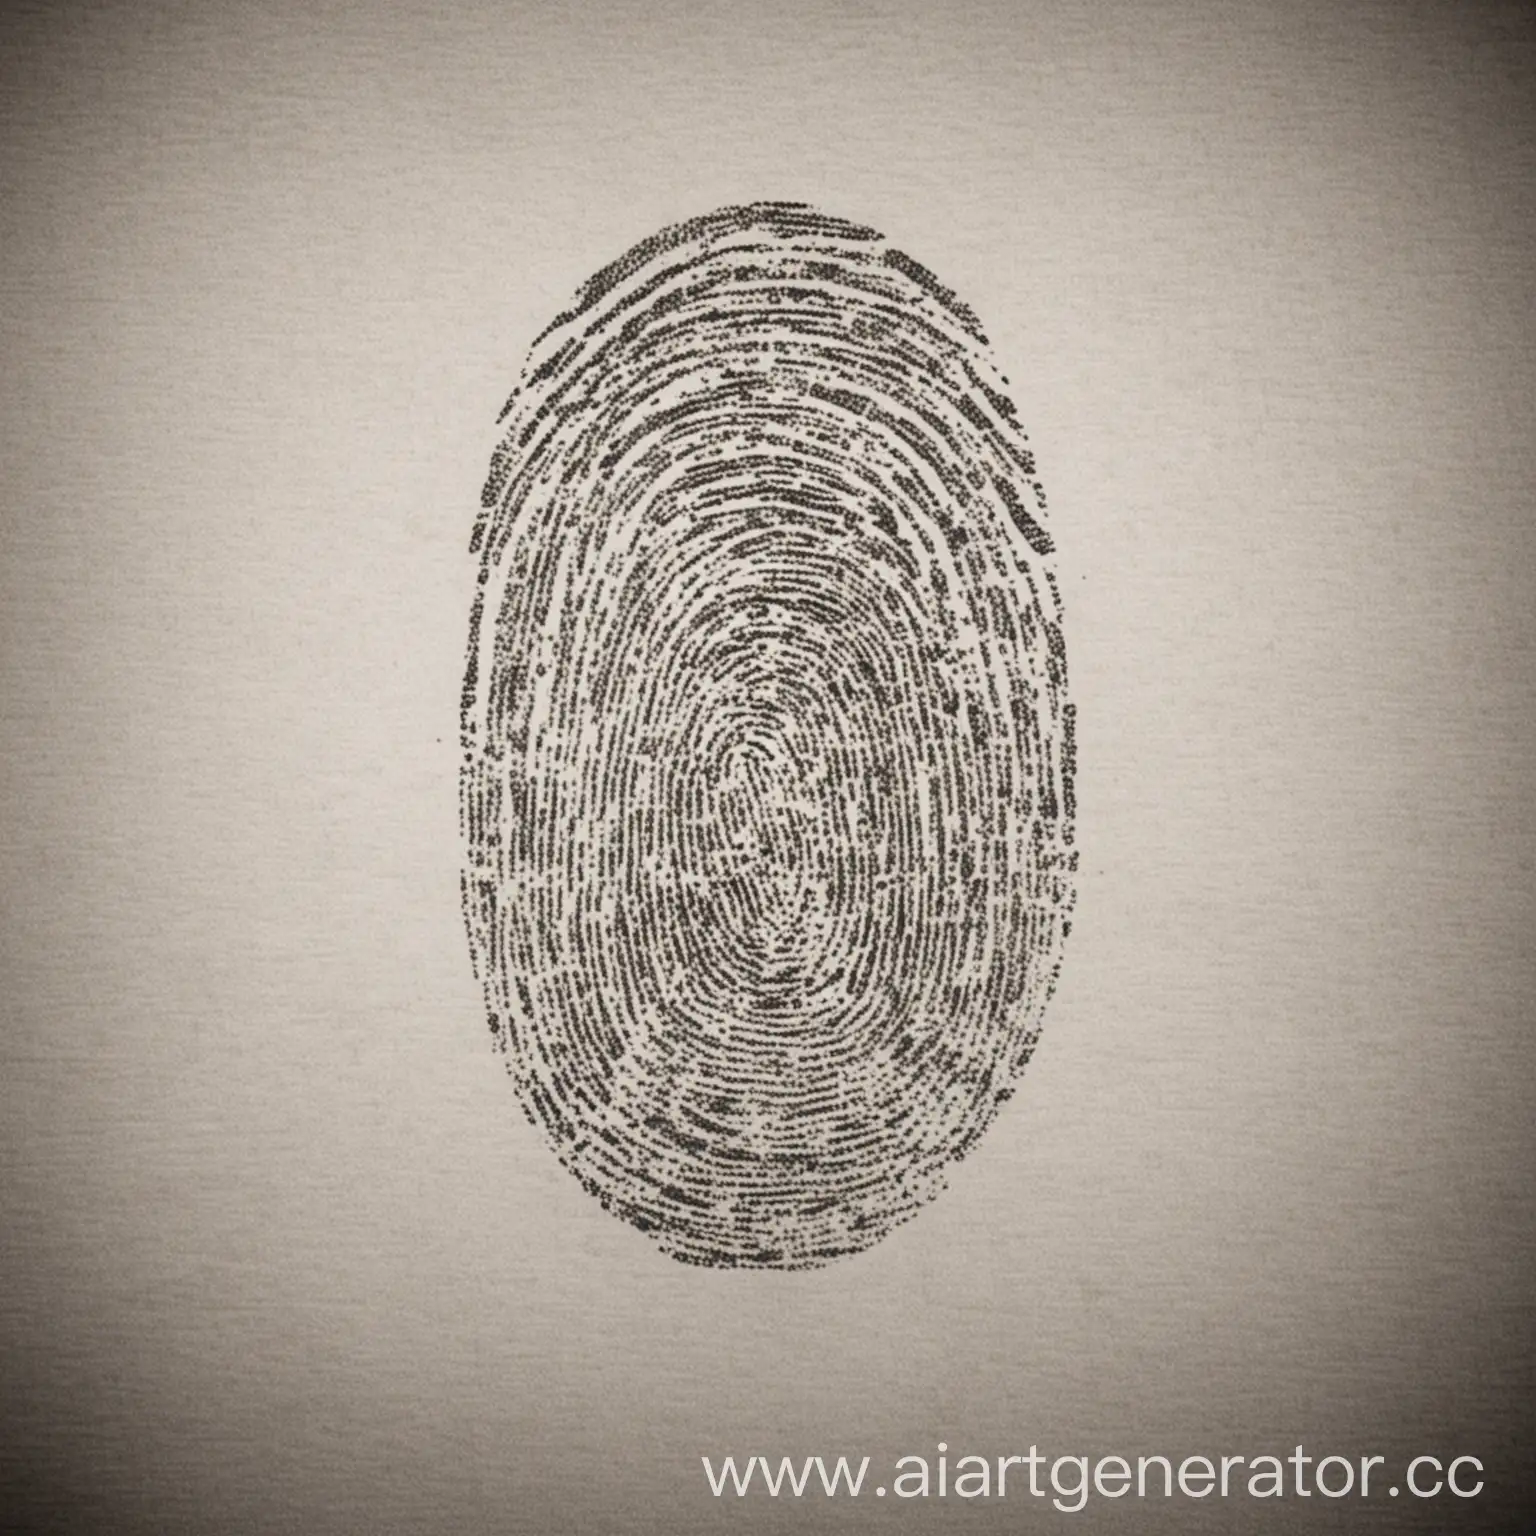 Digital-Fingerprint-Pattern-Technology-Concept